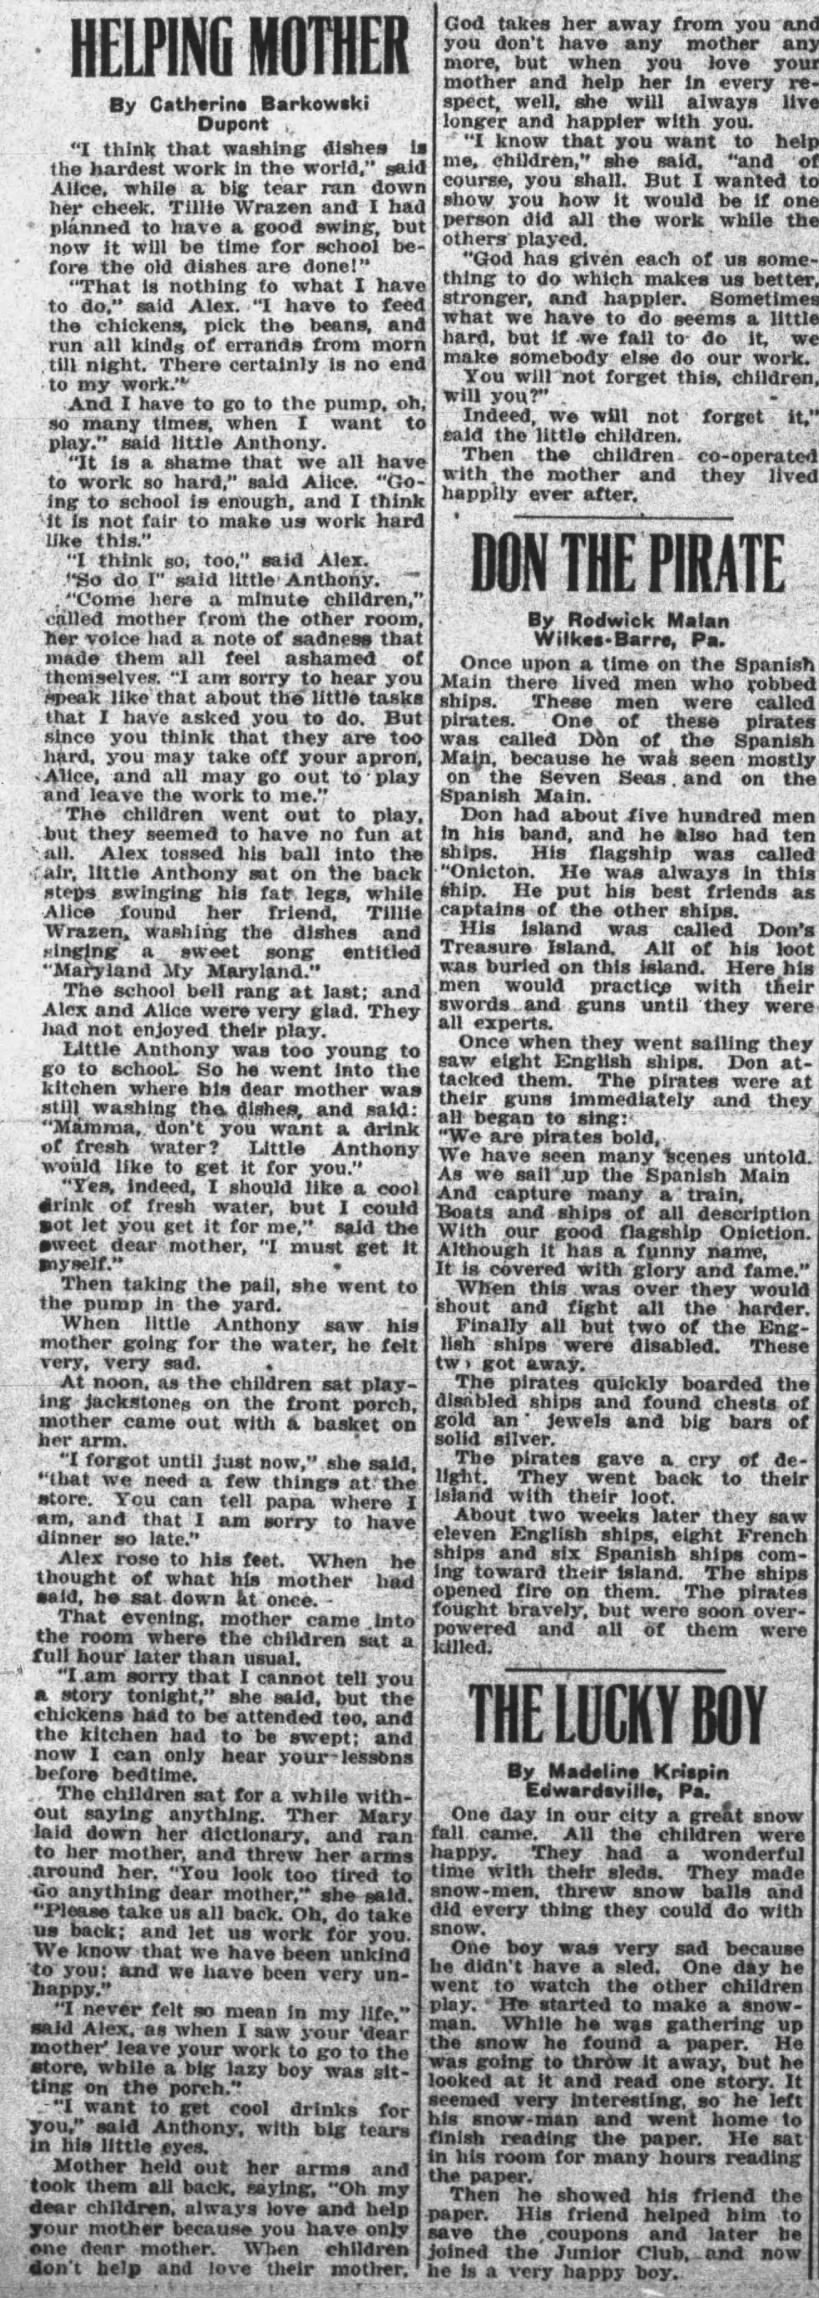 Wilke-Barre Evening News 18 Feb 1928
Catherine Barkowski